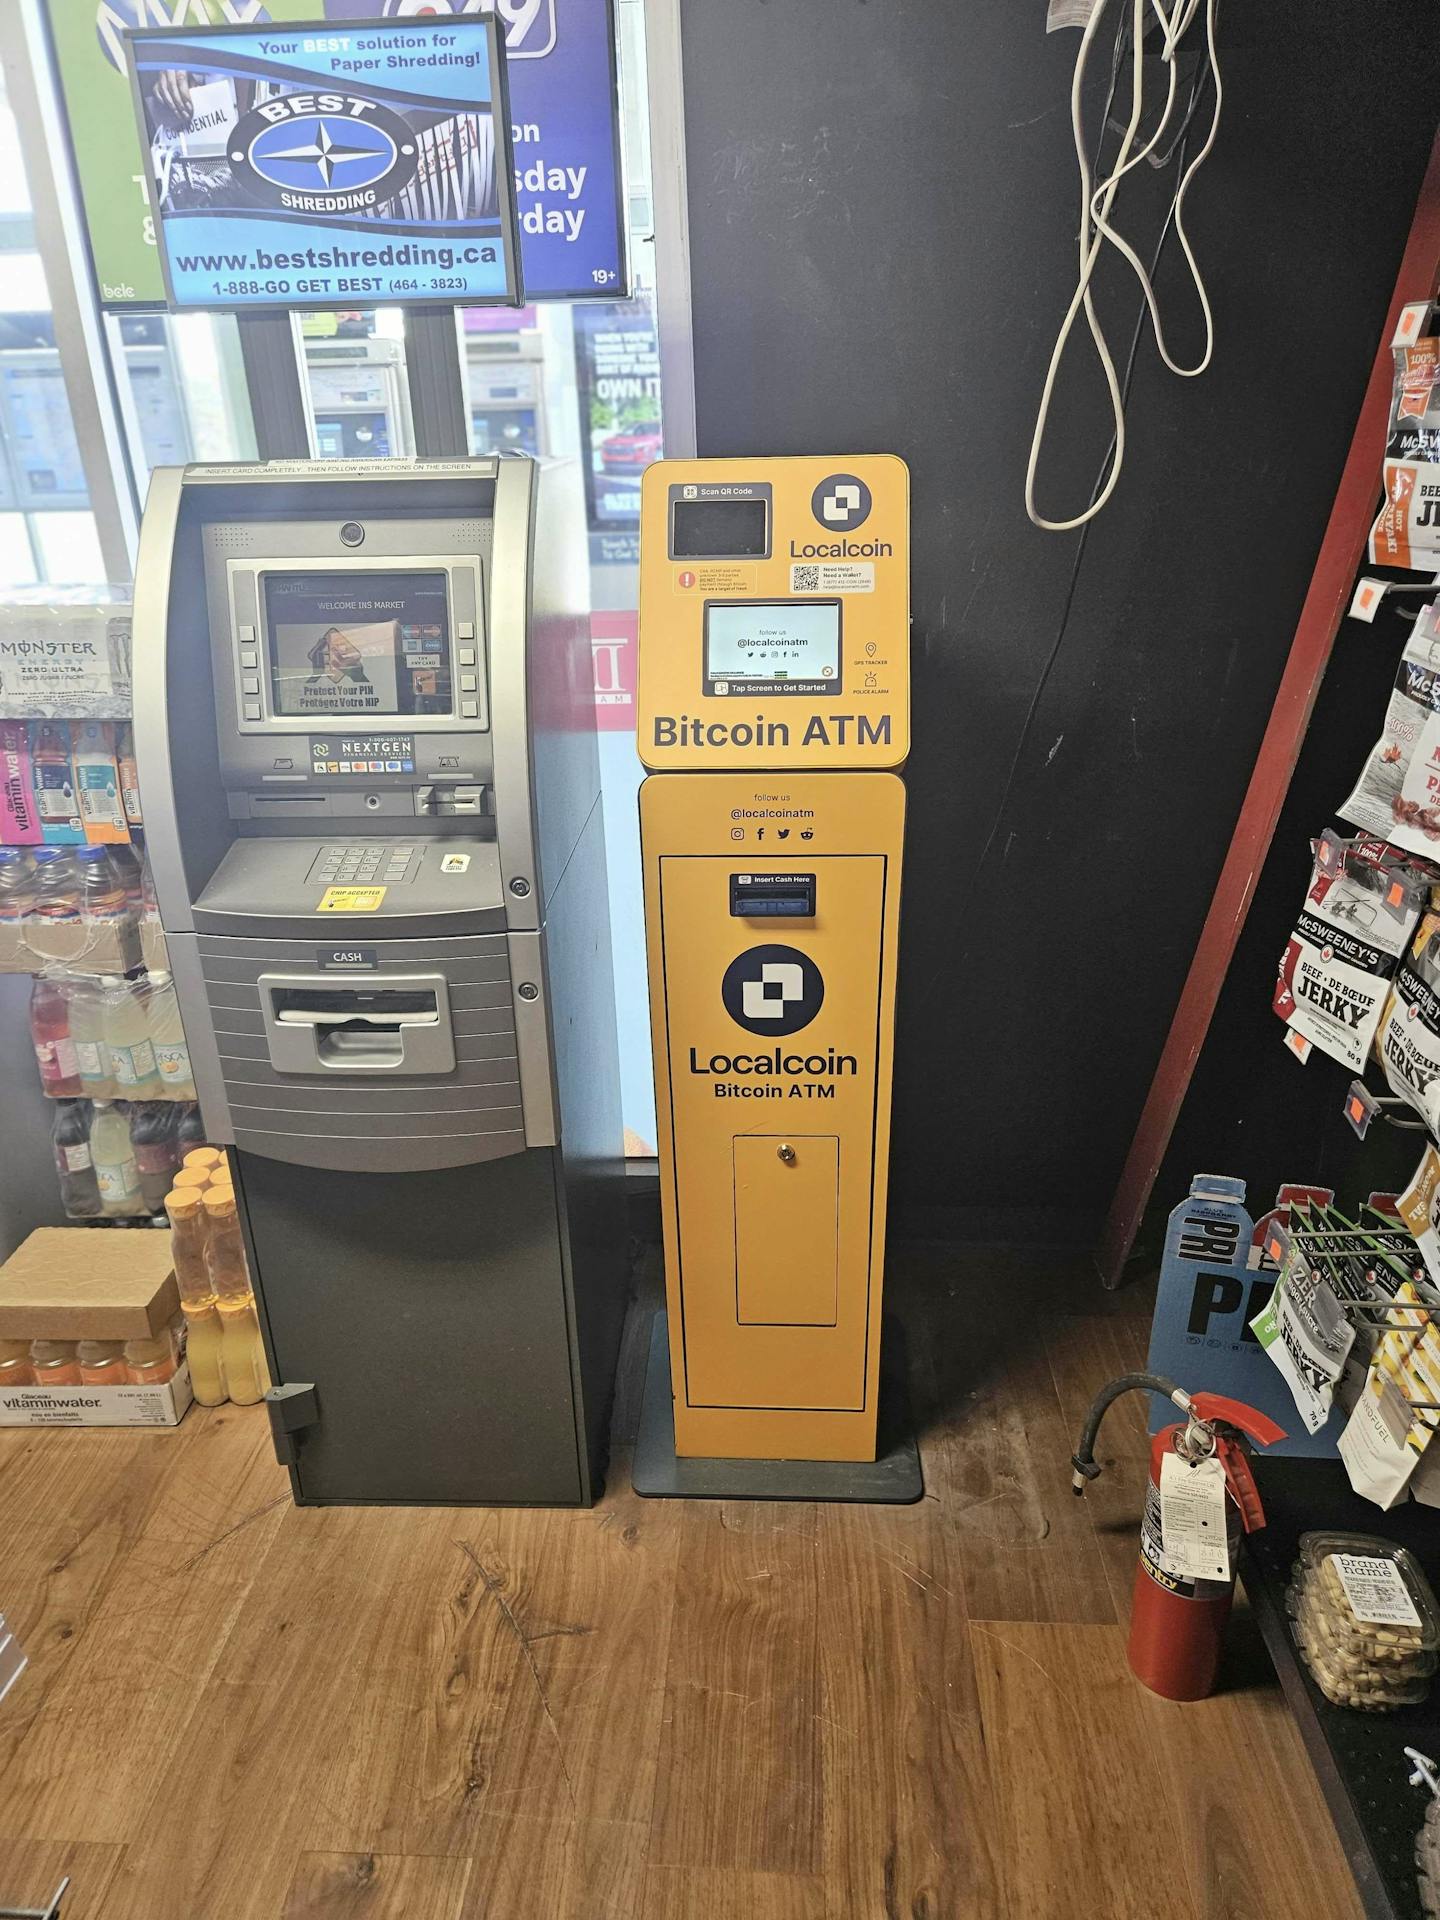 ATM Photo 0